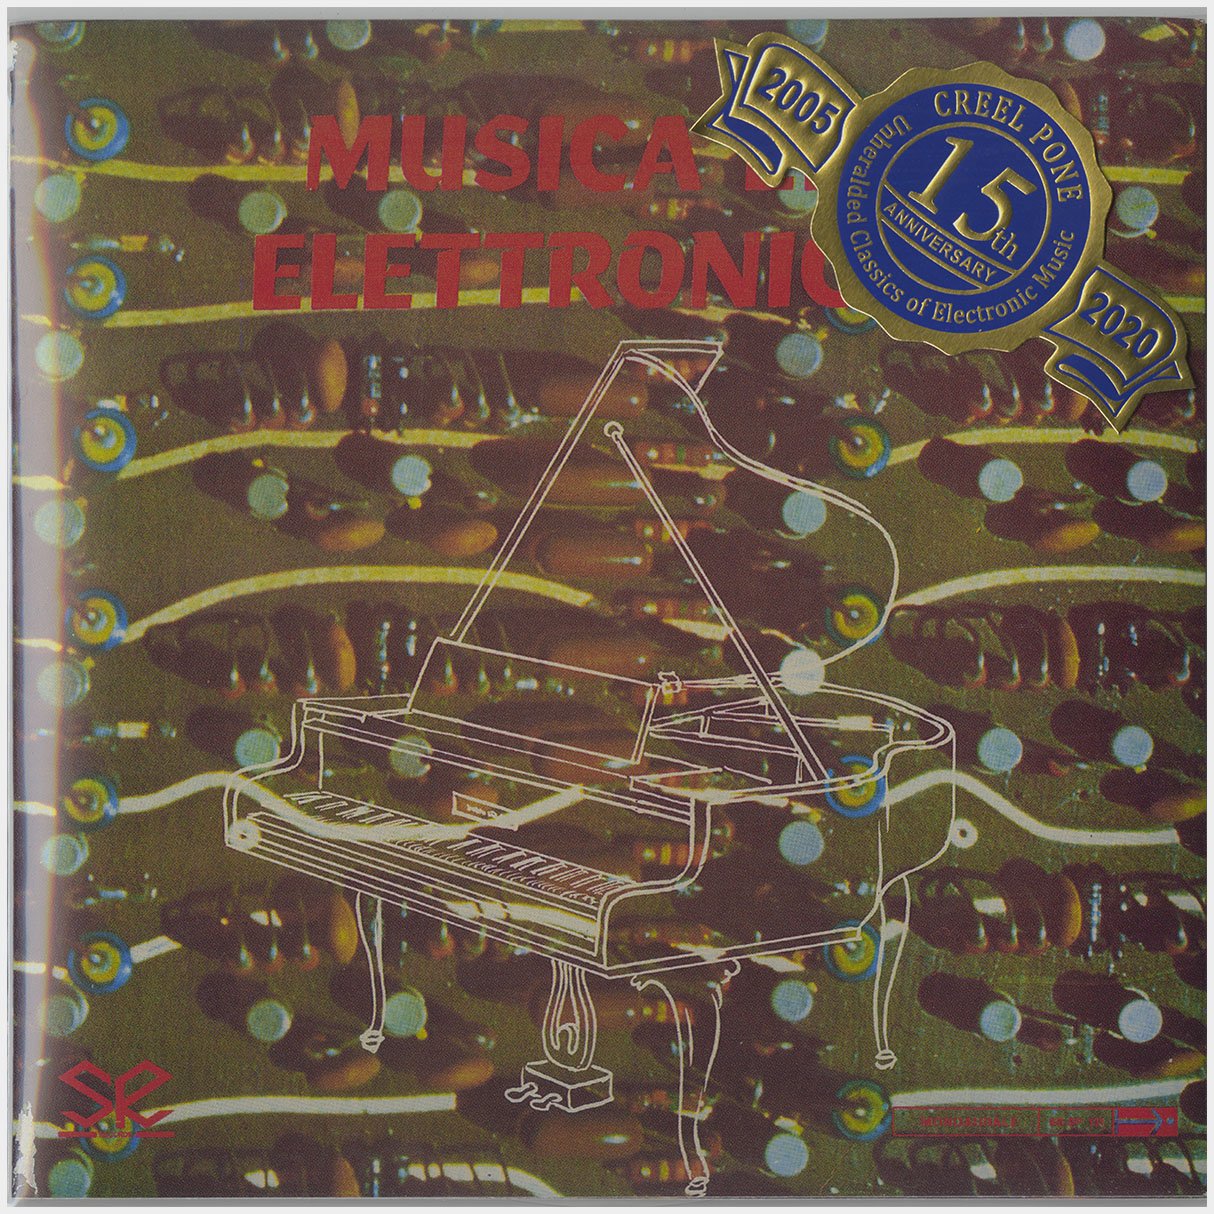 [CP 245 CD] Gino Marinuzzi Jr.; Musica Ed Elettronica, Muraglie Di Ghiaccio, Figure Geometriche